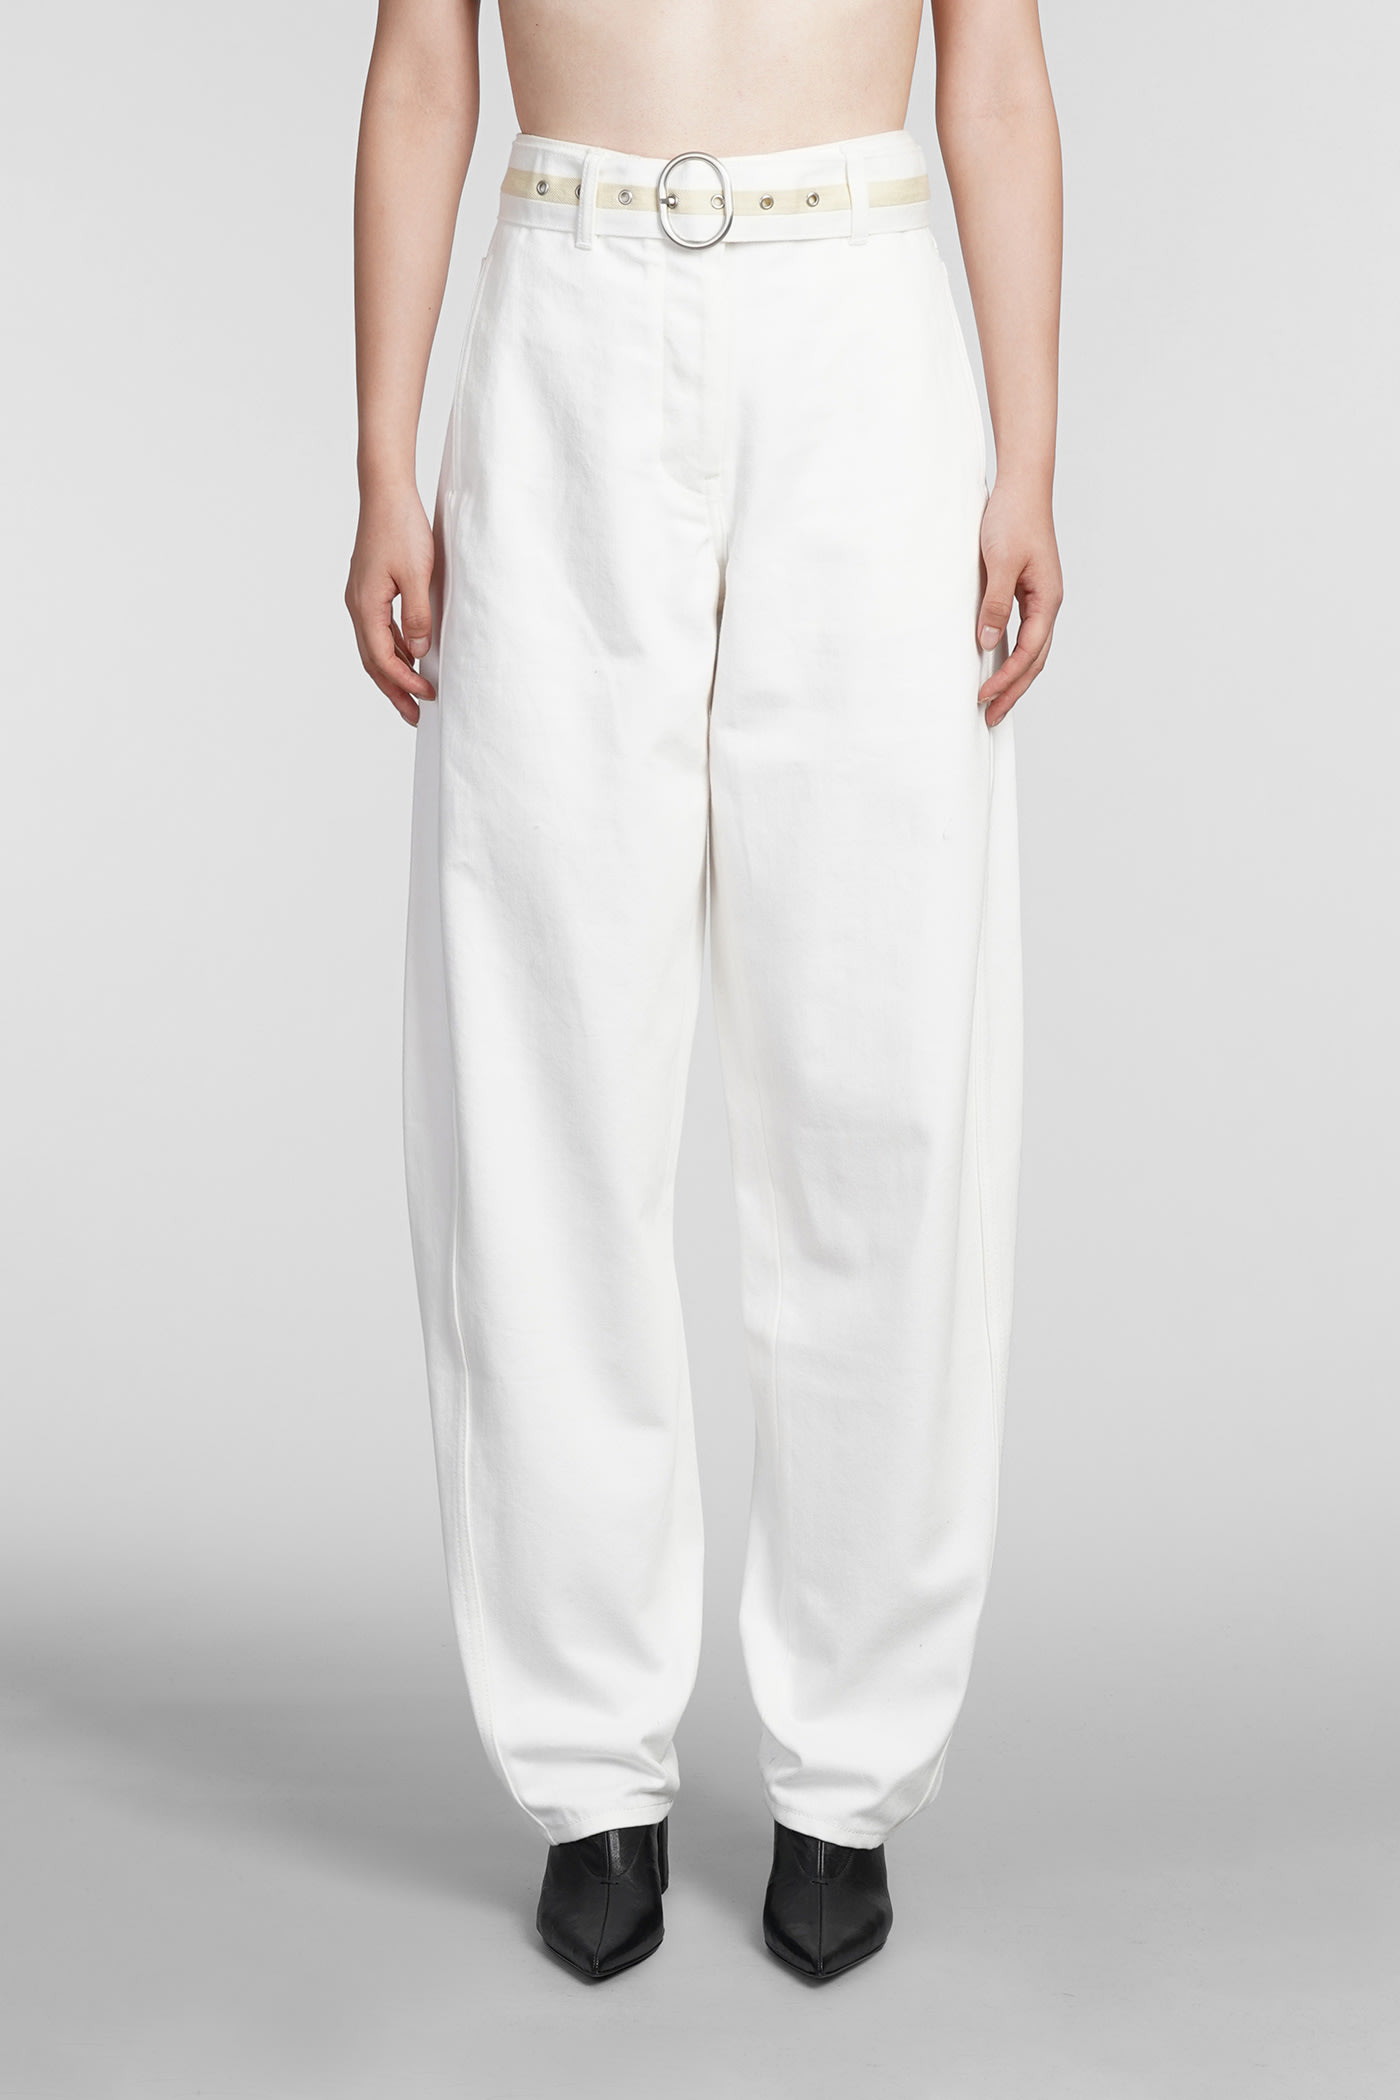 Jil Sander Jeans In White Cotton